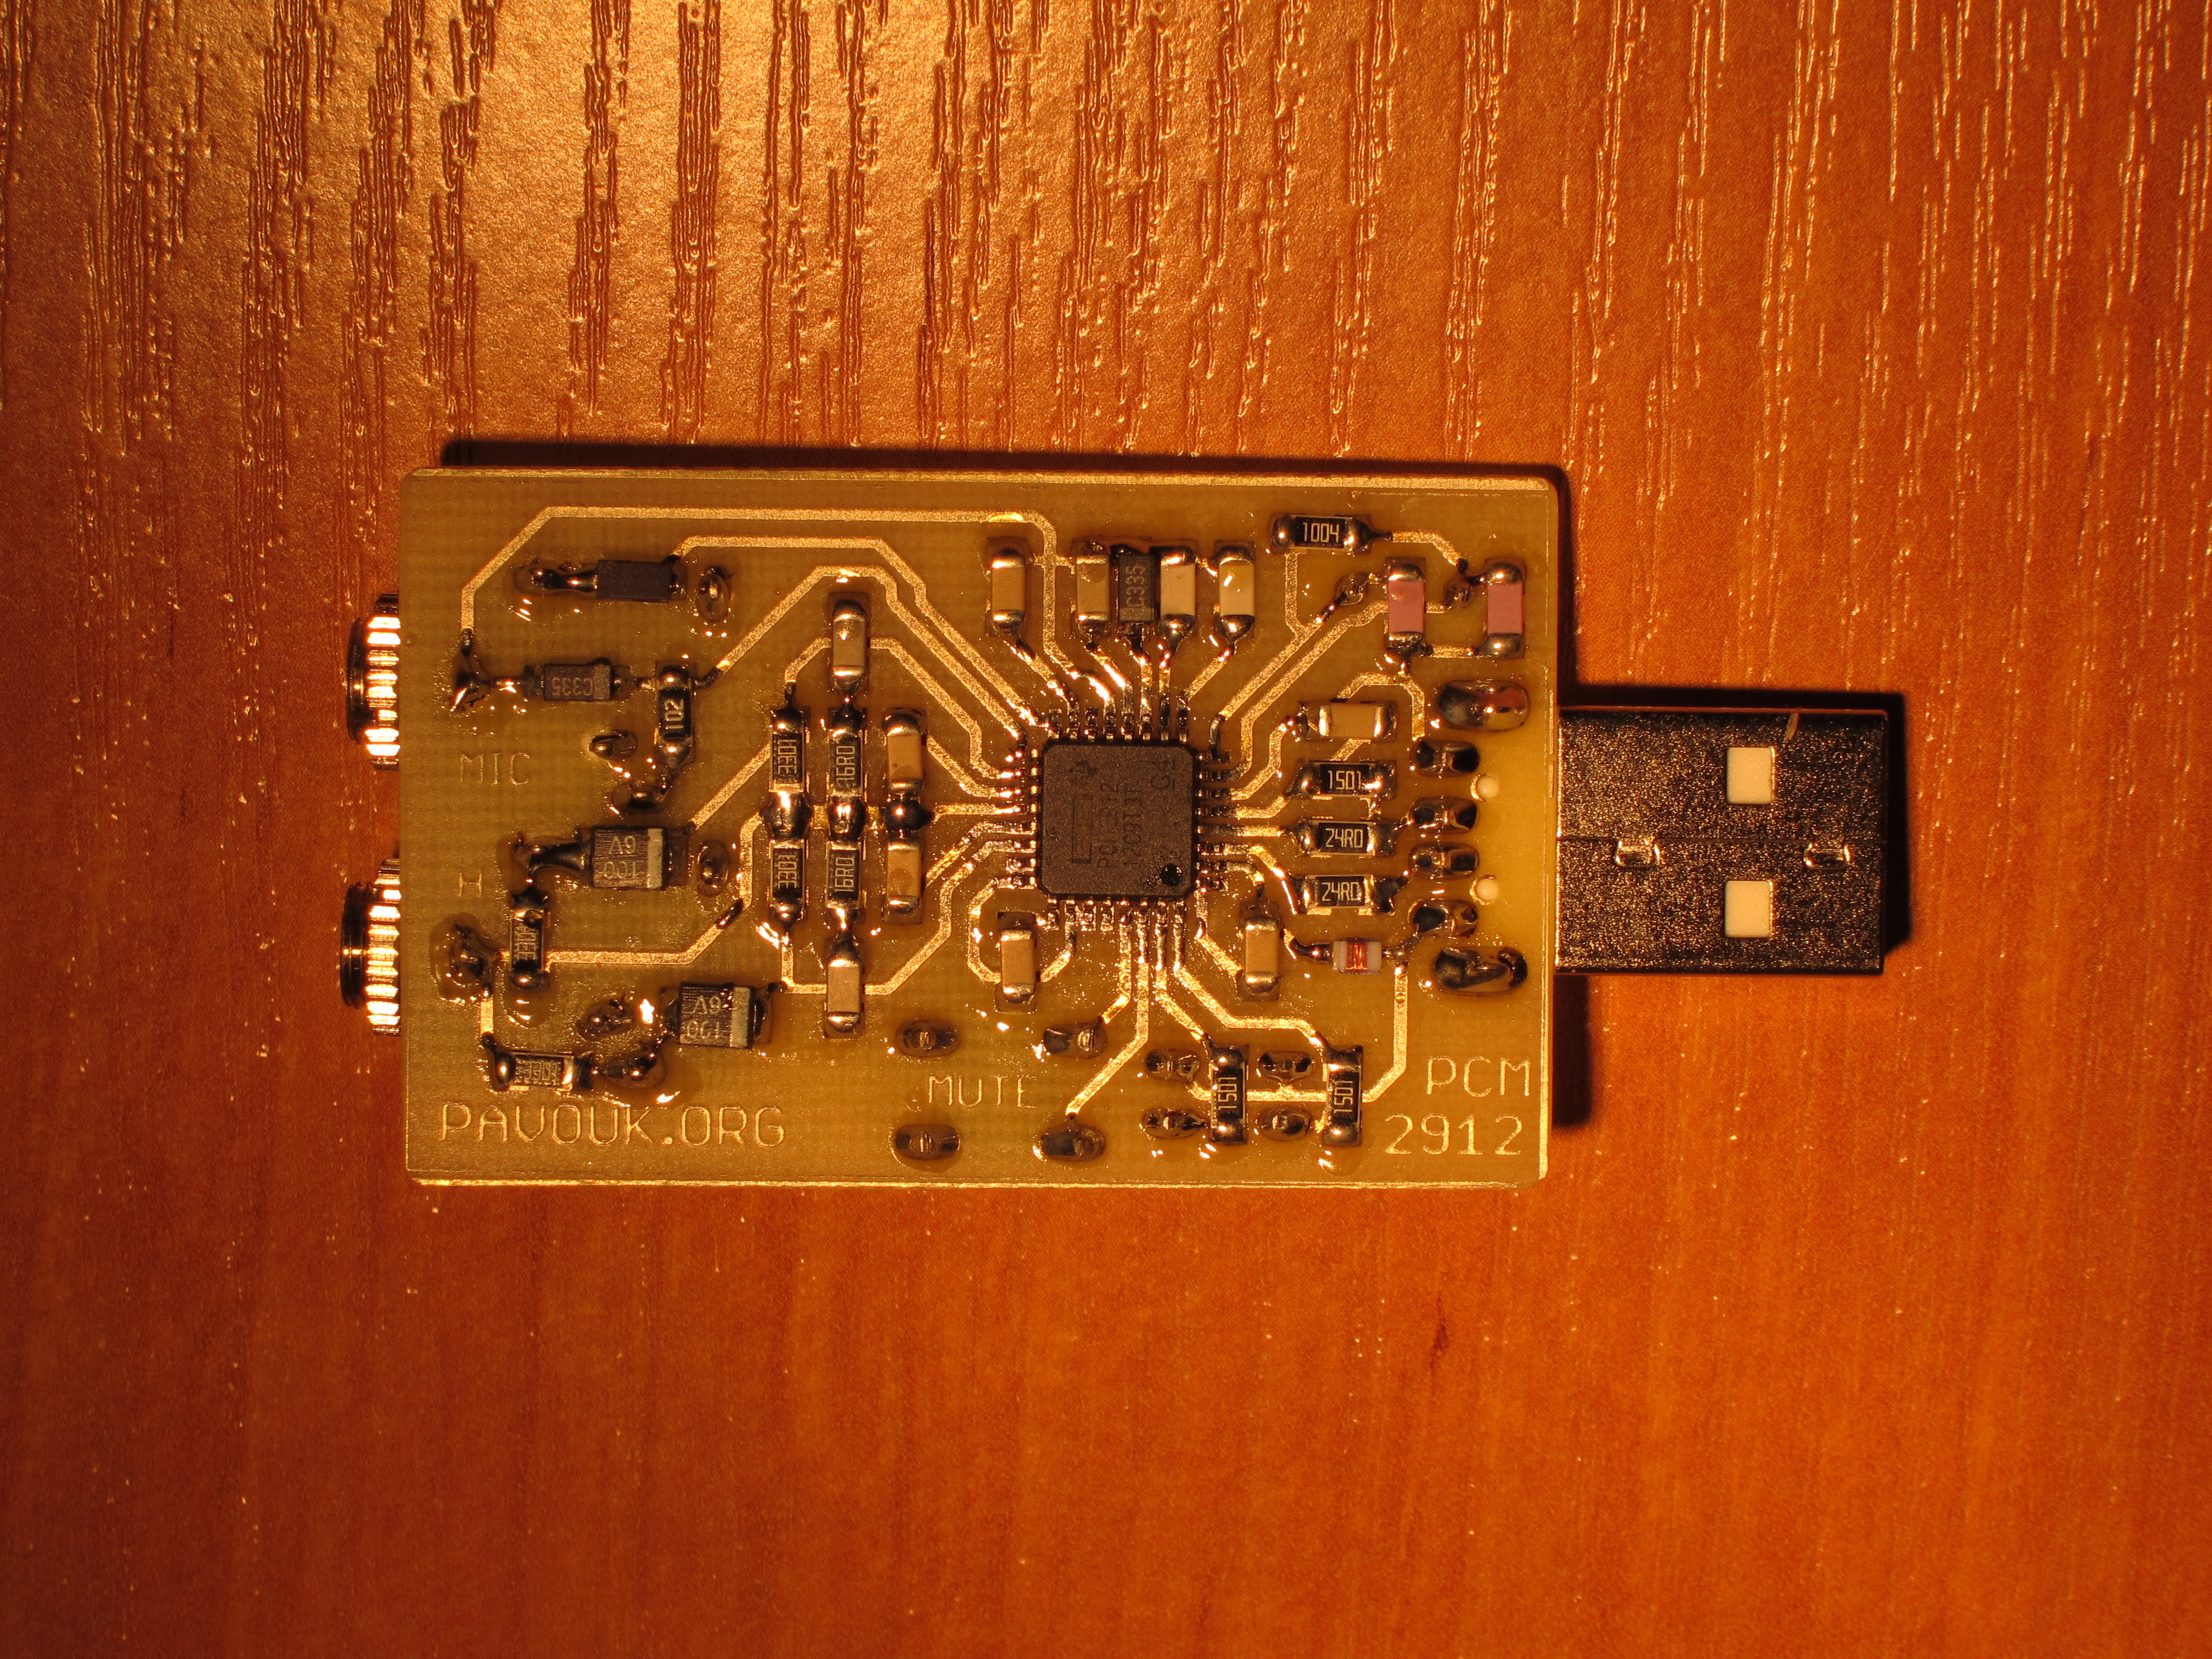 USB audio with PCM2912